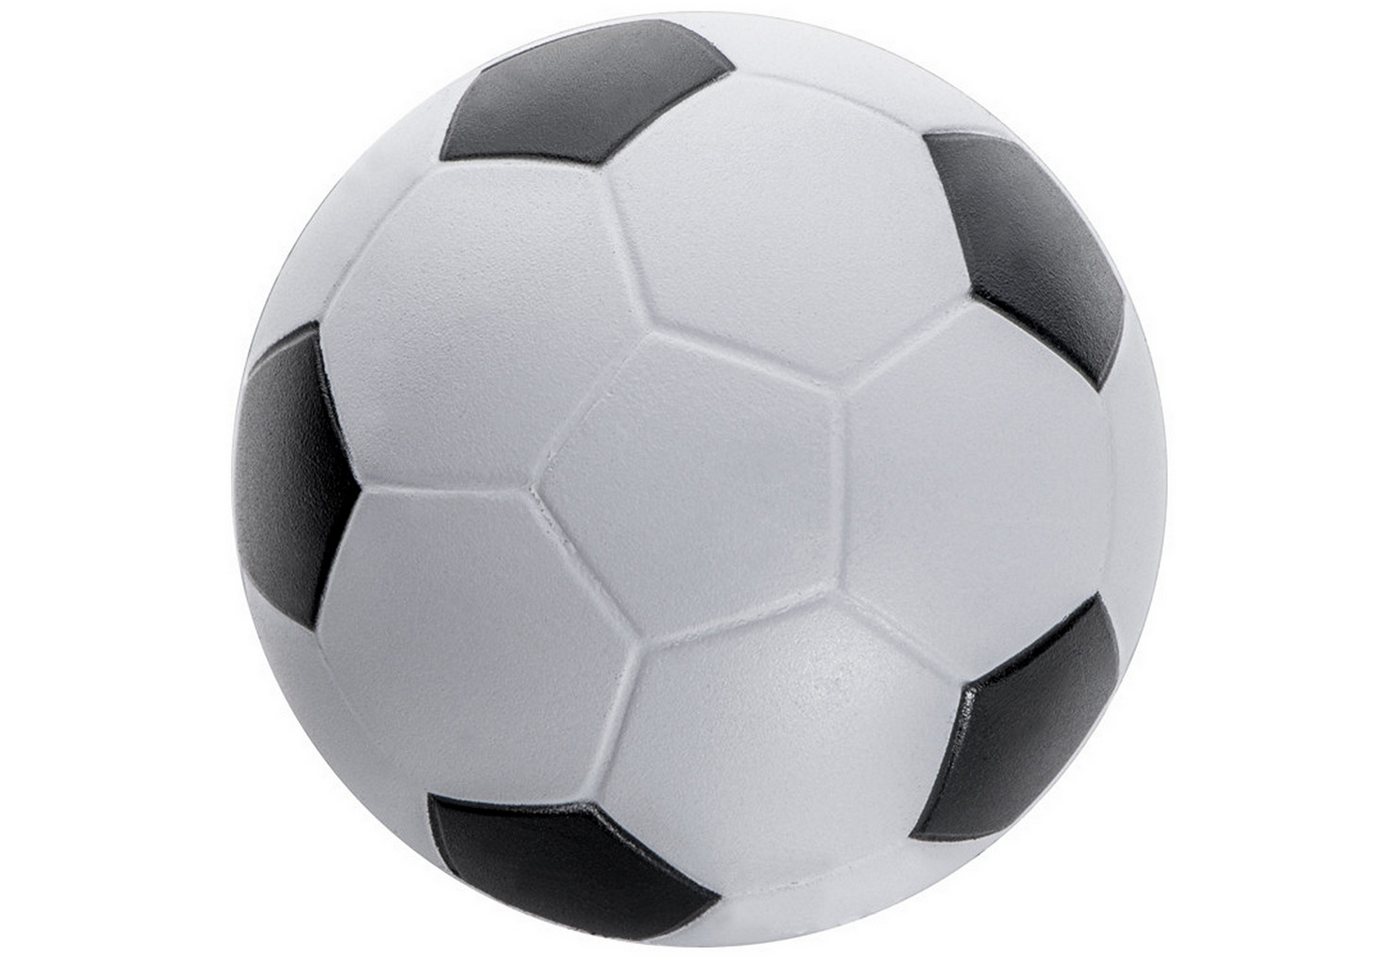 Livepac Office Physioball Anti-Stressball / Wutball / "Fußball" von Livepac Office